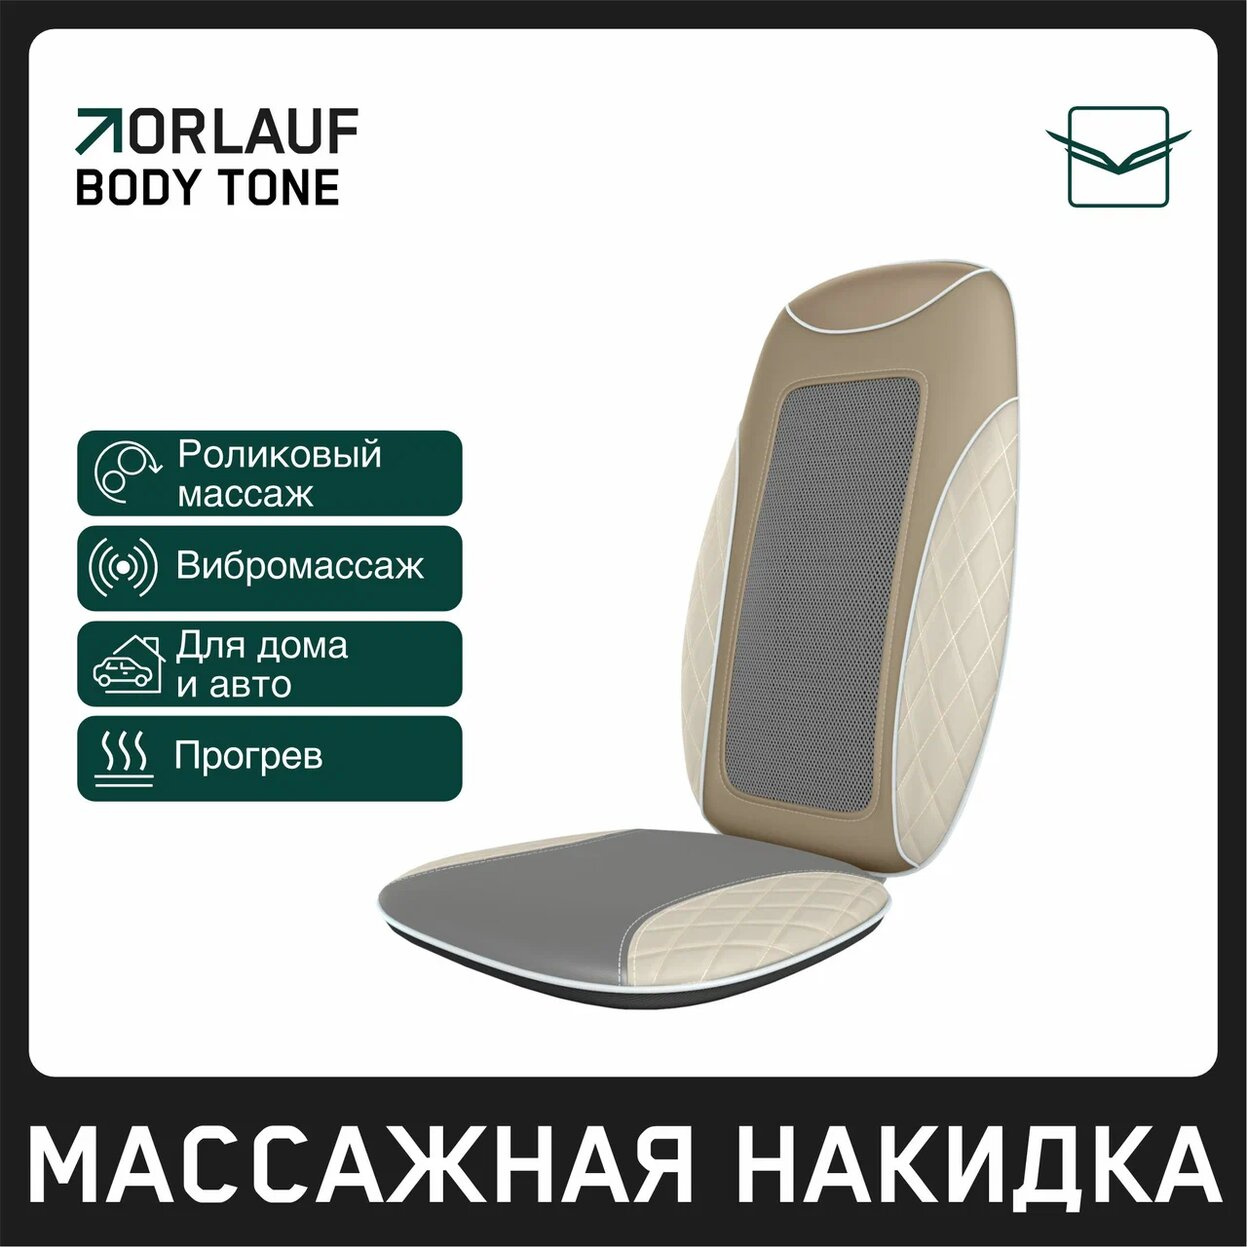 Orlauf Body Tone из каталога массажных накидок в Омске по цене 15400 ₽